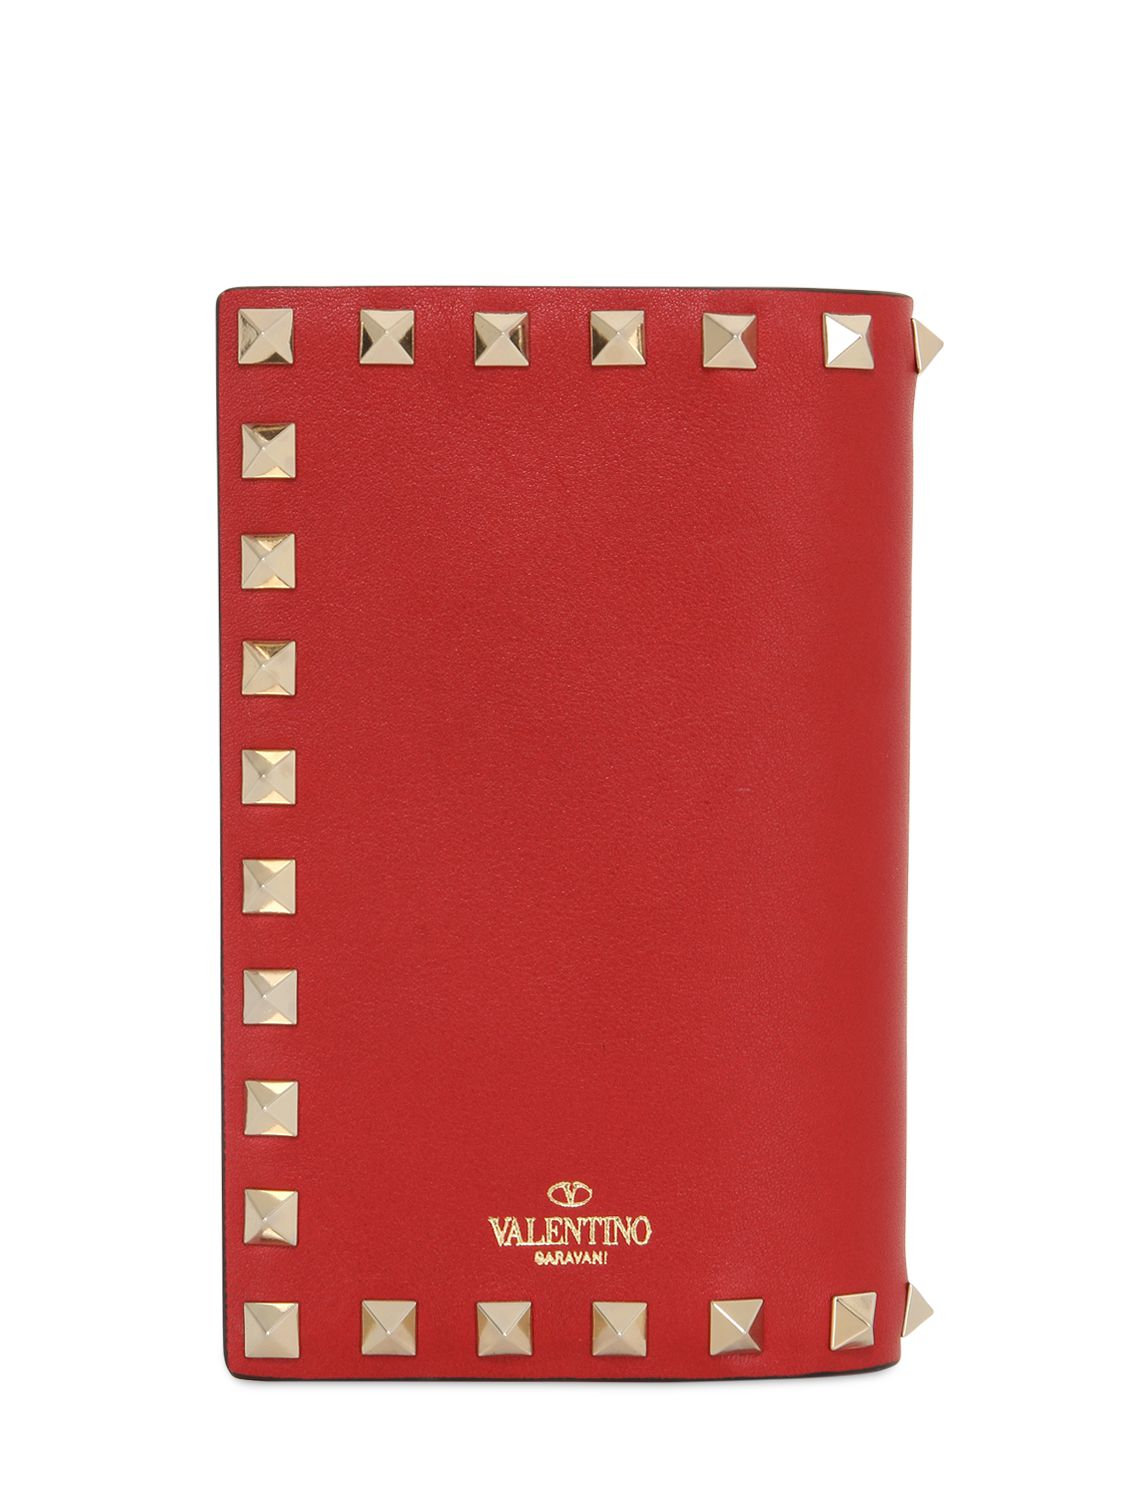 Lyst - Valentino Rockstud Leather Passport Holder in Red